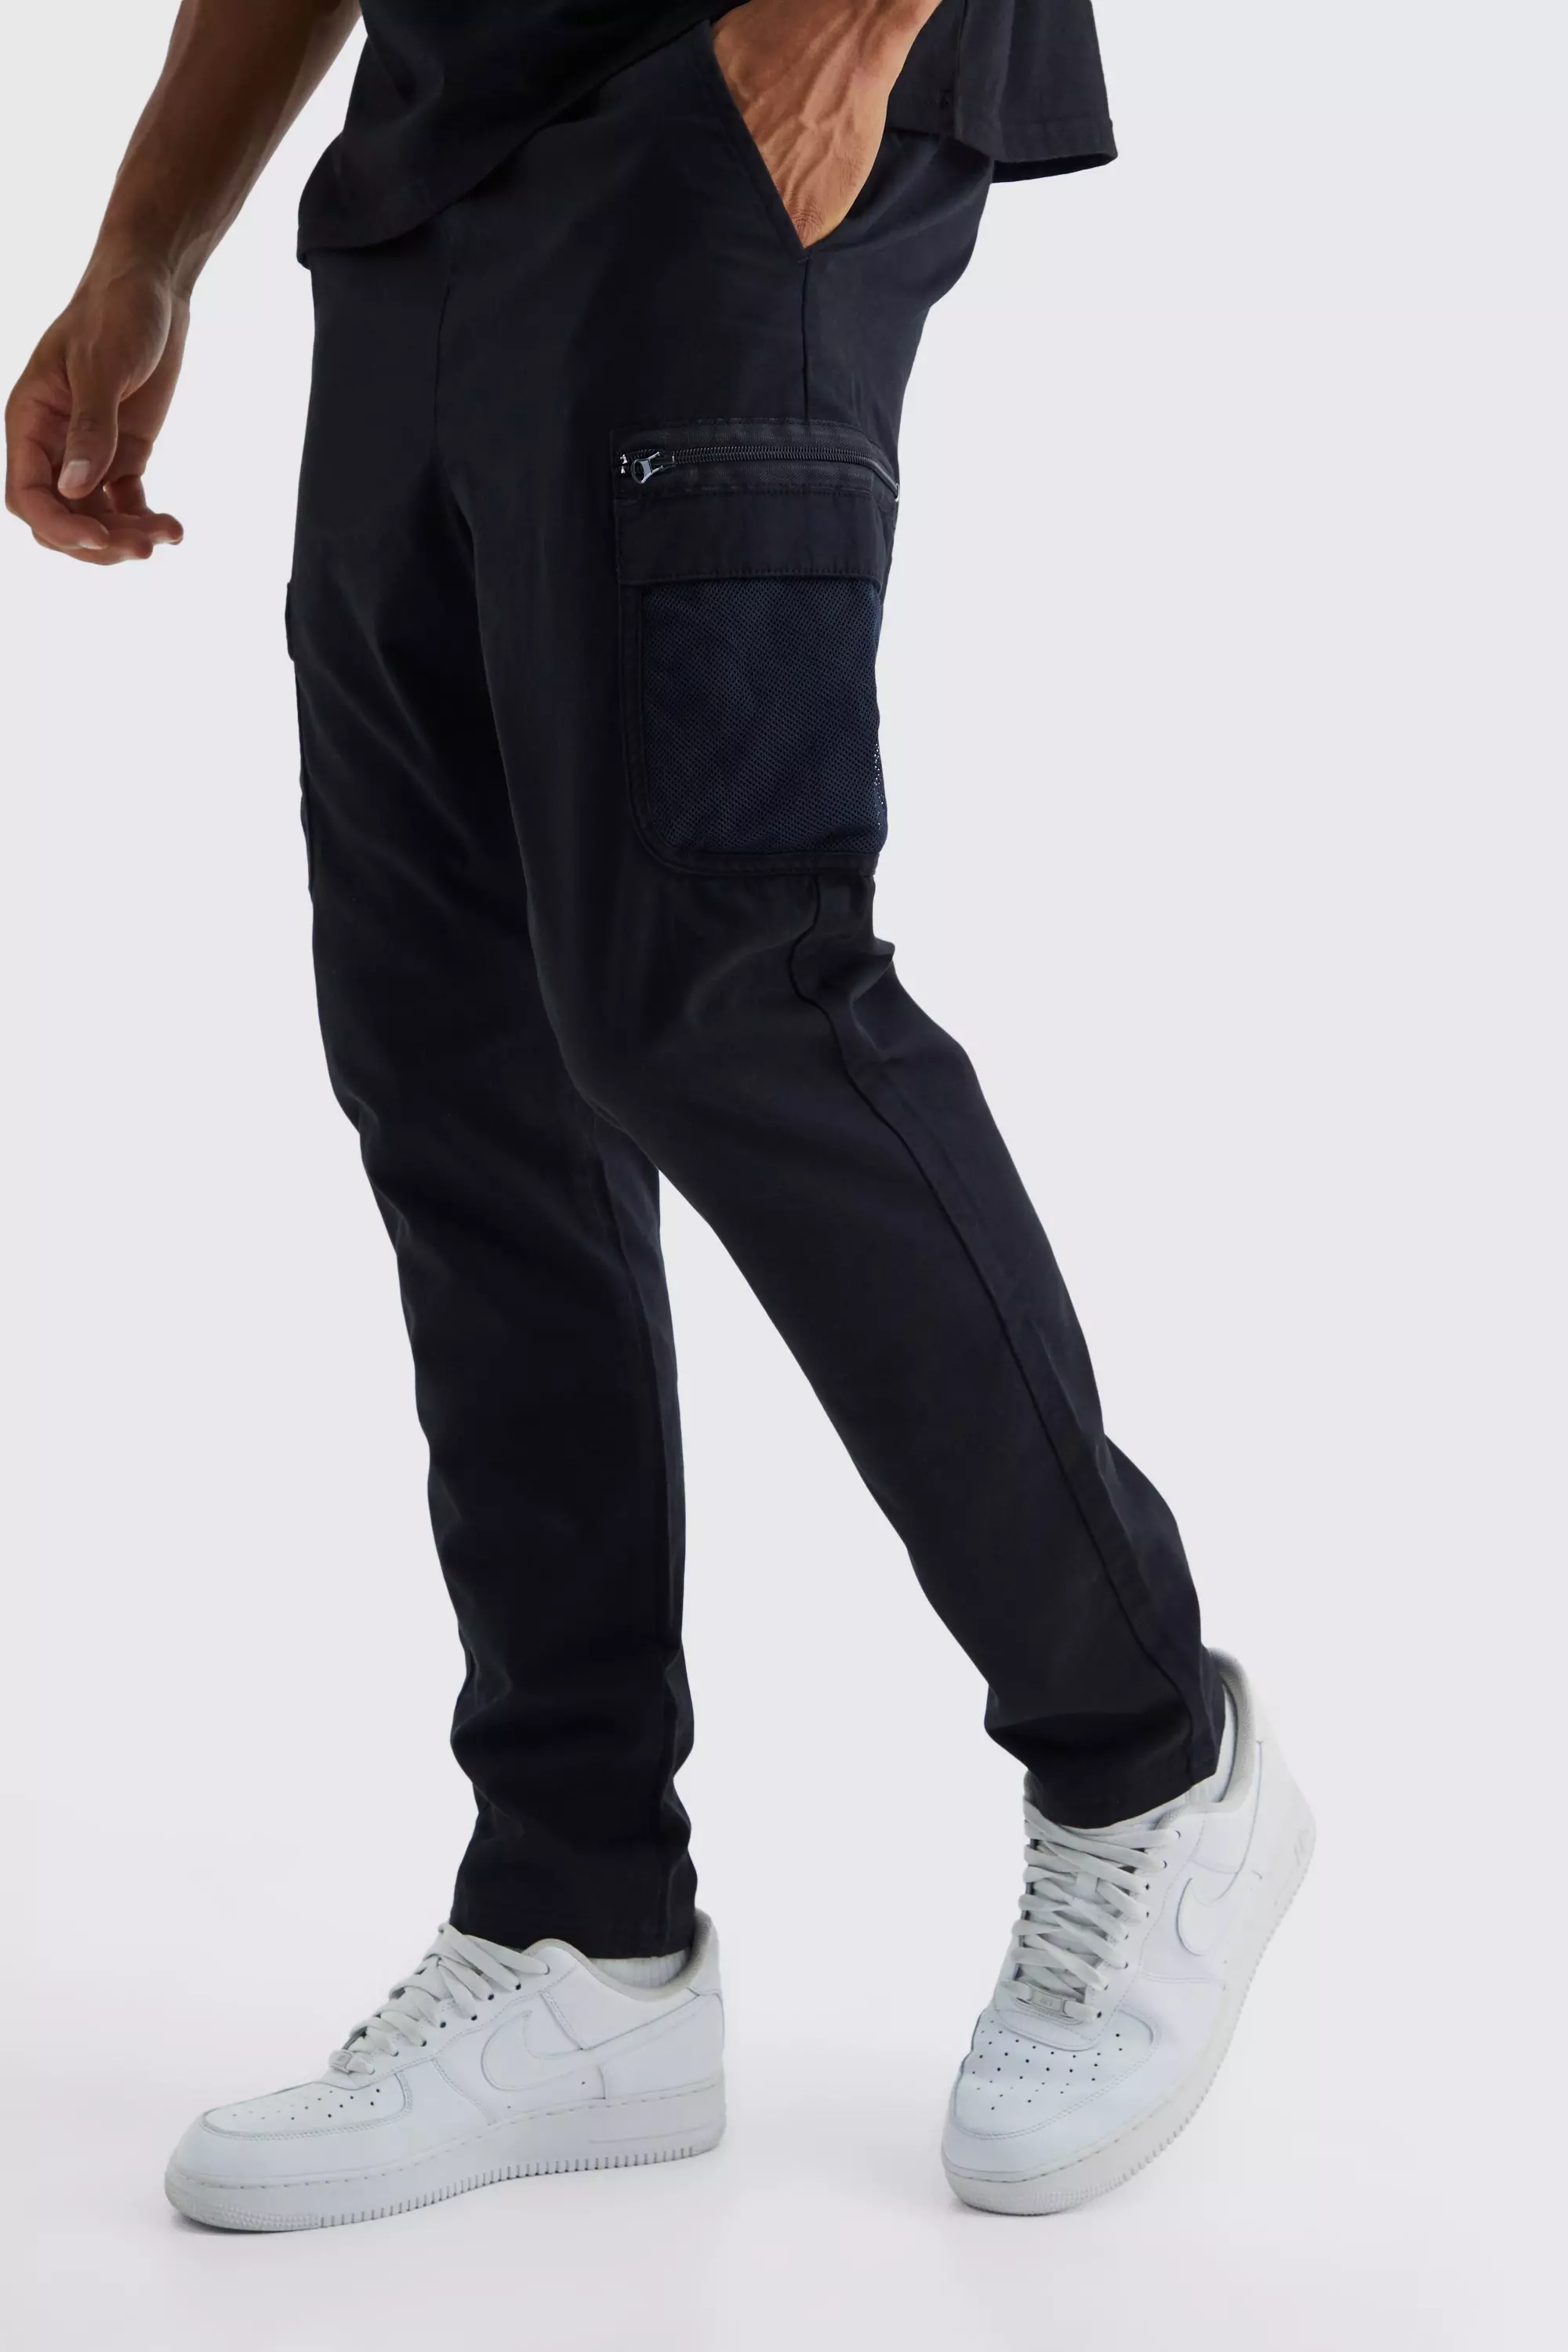 Tall Elastic Comfort Mesh Pocket Cargo Pants Black